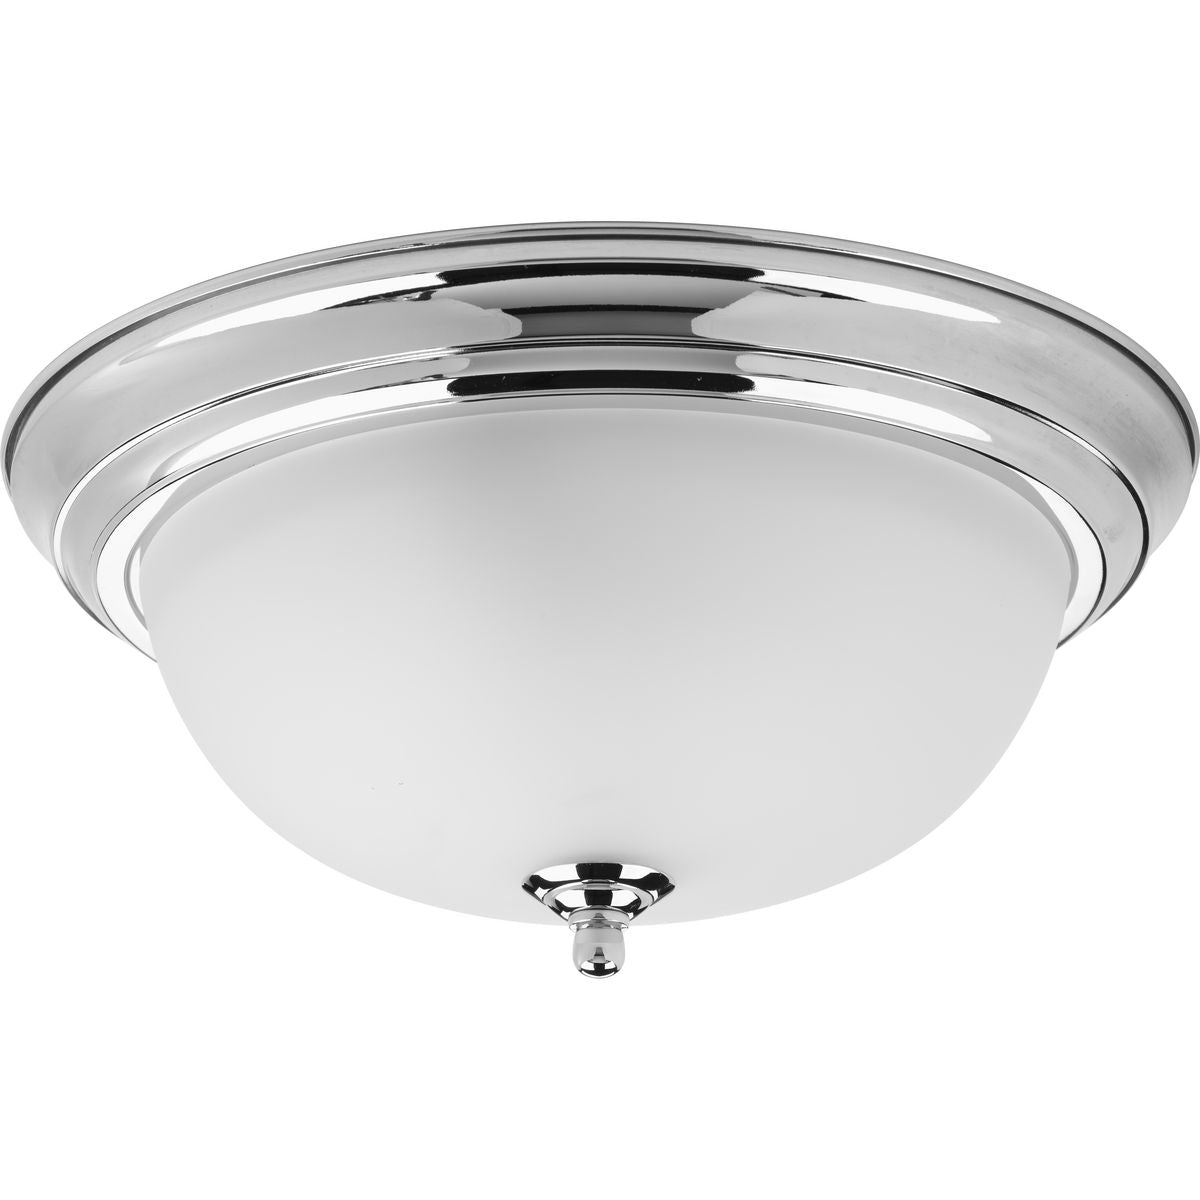 PROGRESS LIGHTING P3925-15ET Polished Chrome Two-Light Dome Glass 13-1/4" Close-to-Ceiling